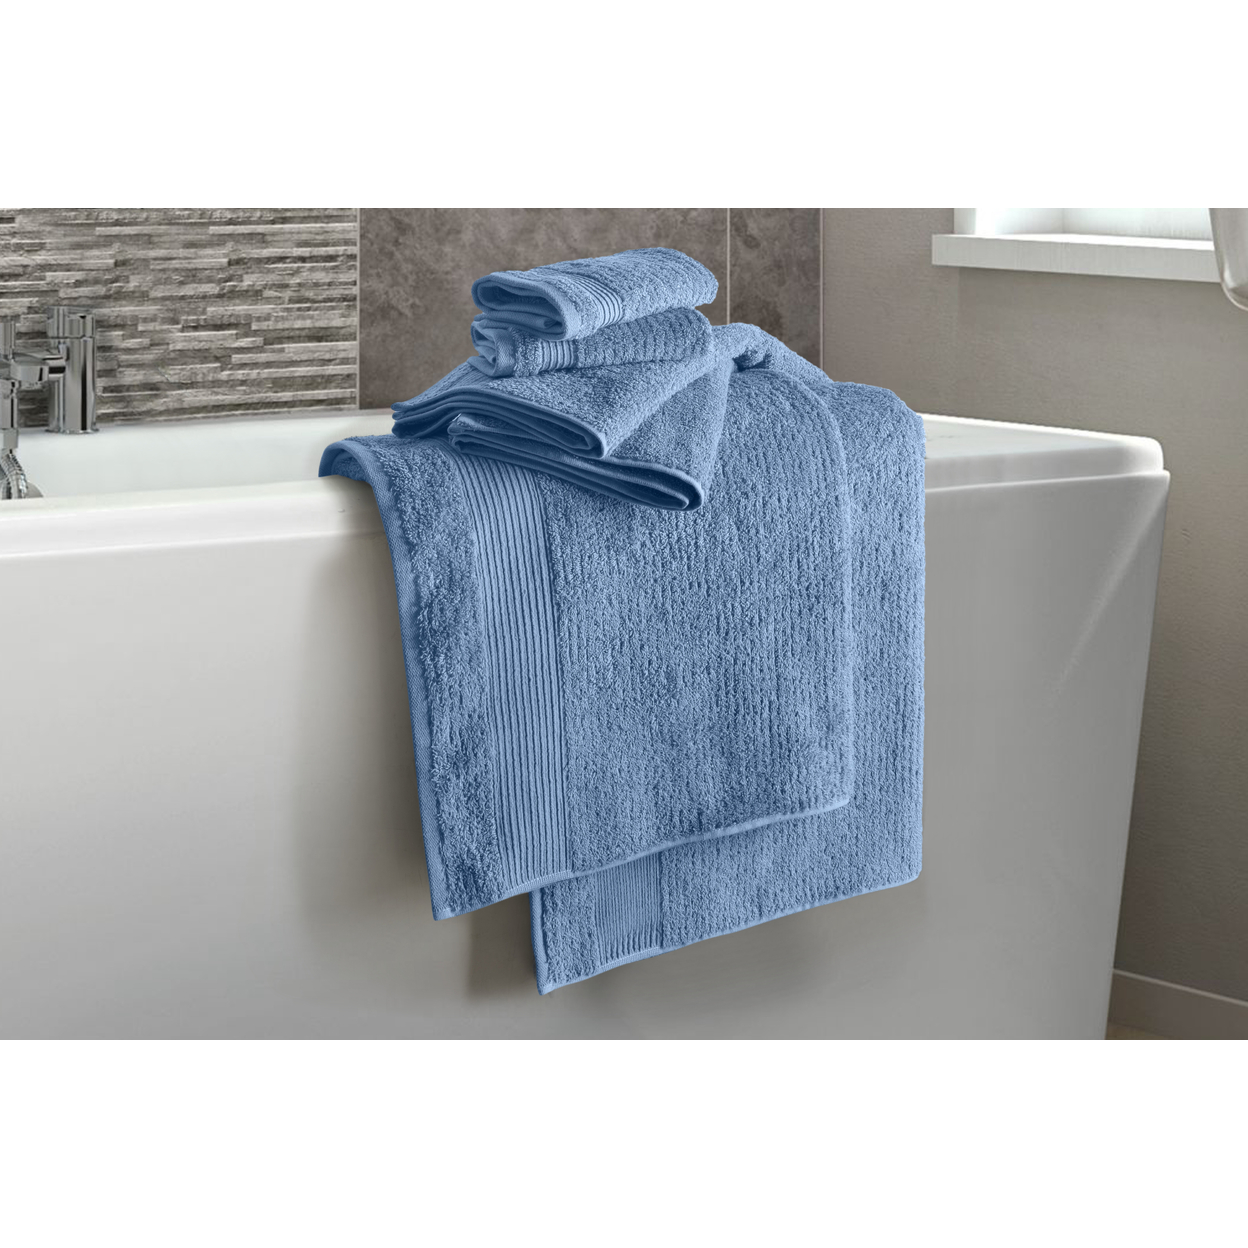 Chic Home Premium 6-Piece 100% Pure Turkish Cotton Towel Set, Jacquard Weave Design, OEKO-TEX Standard 100 Certified - Blue